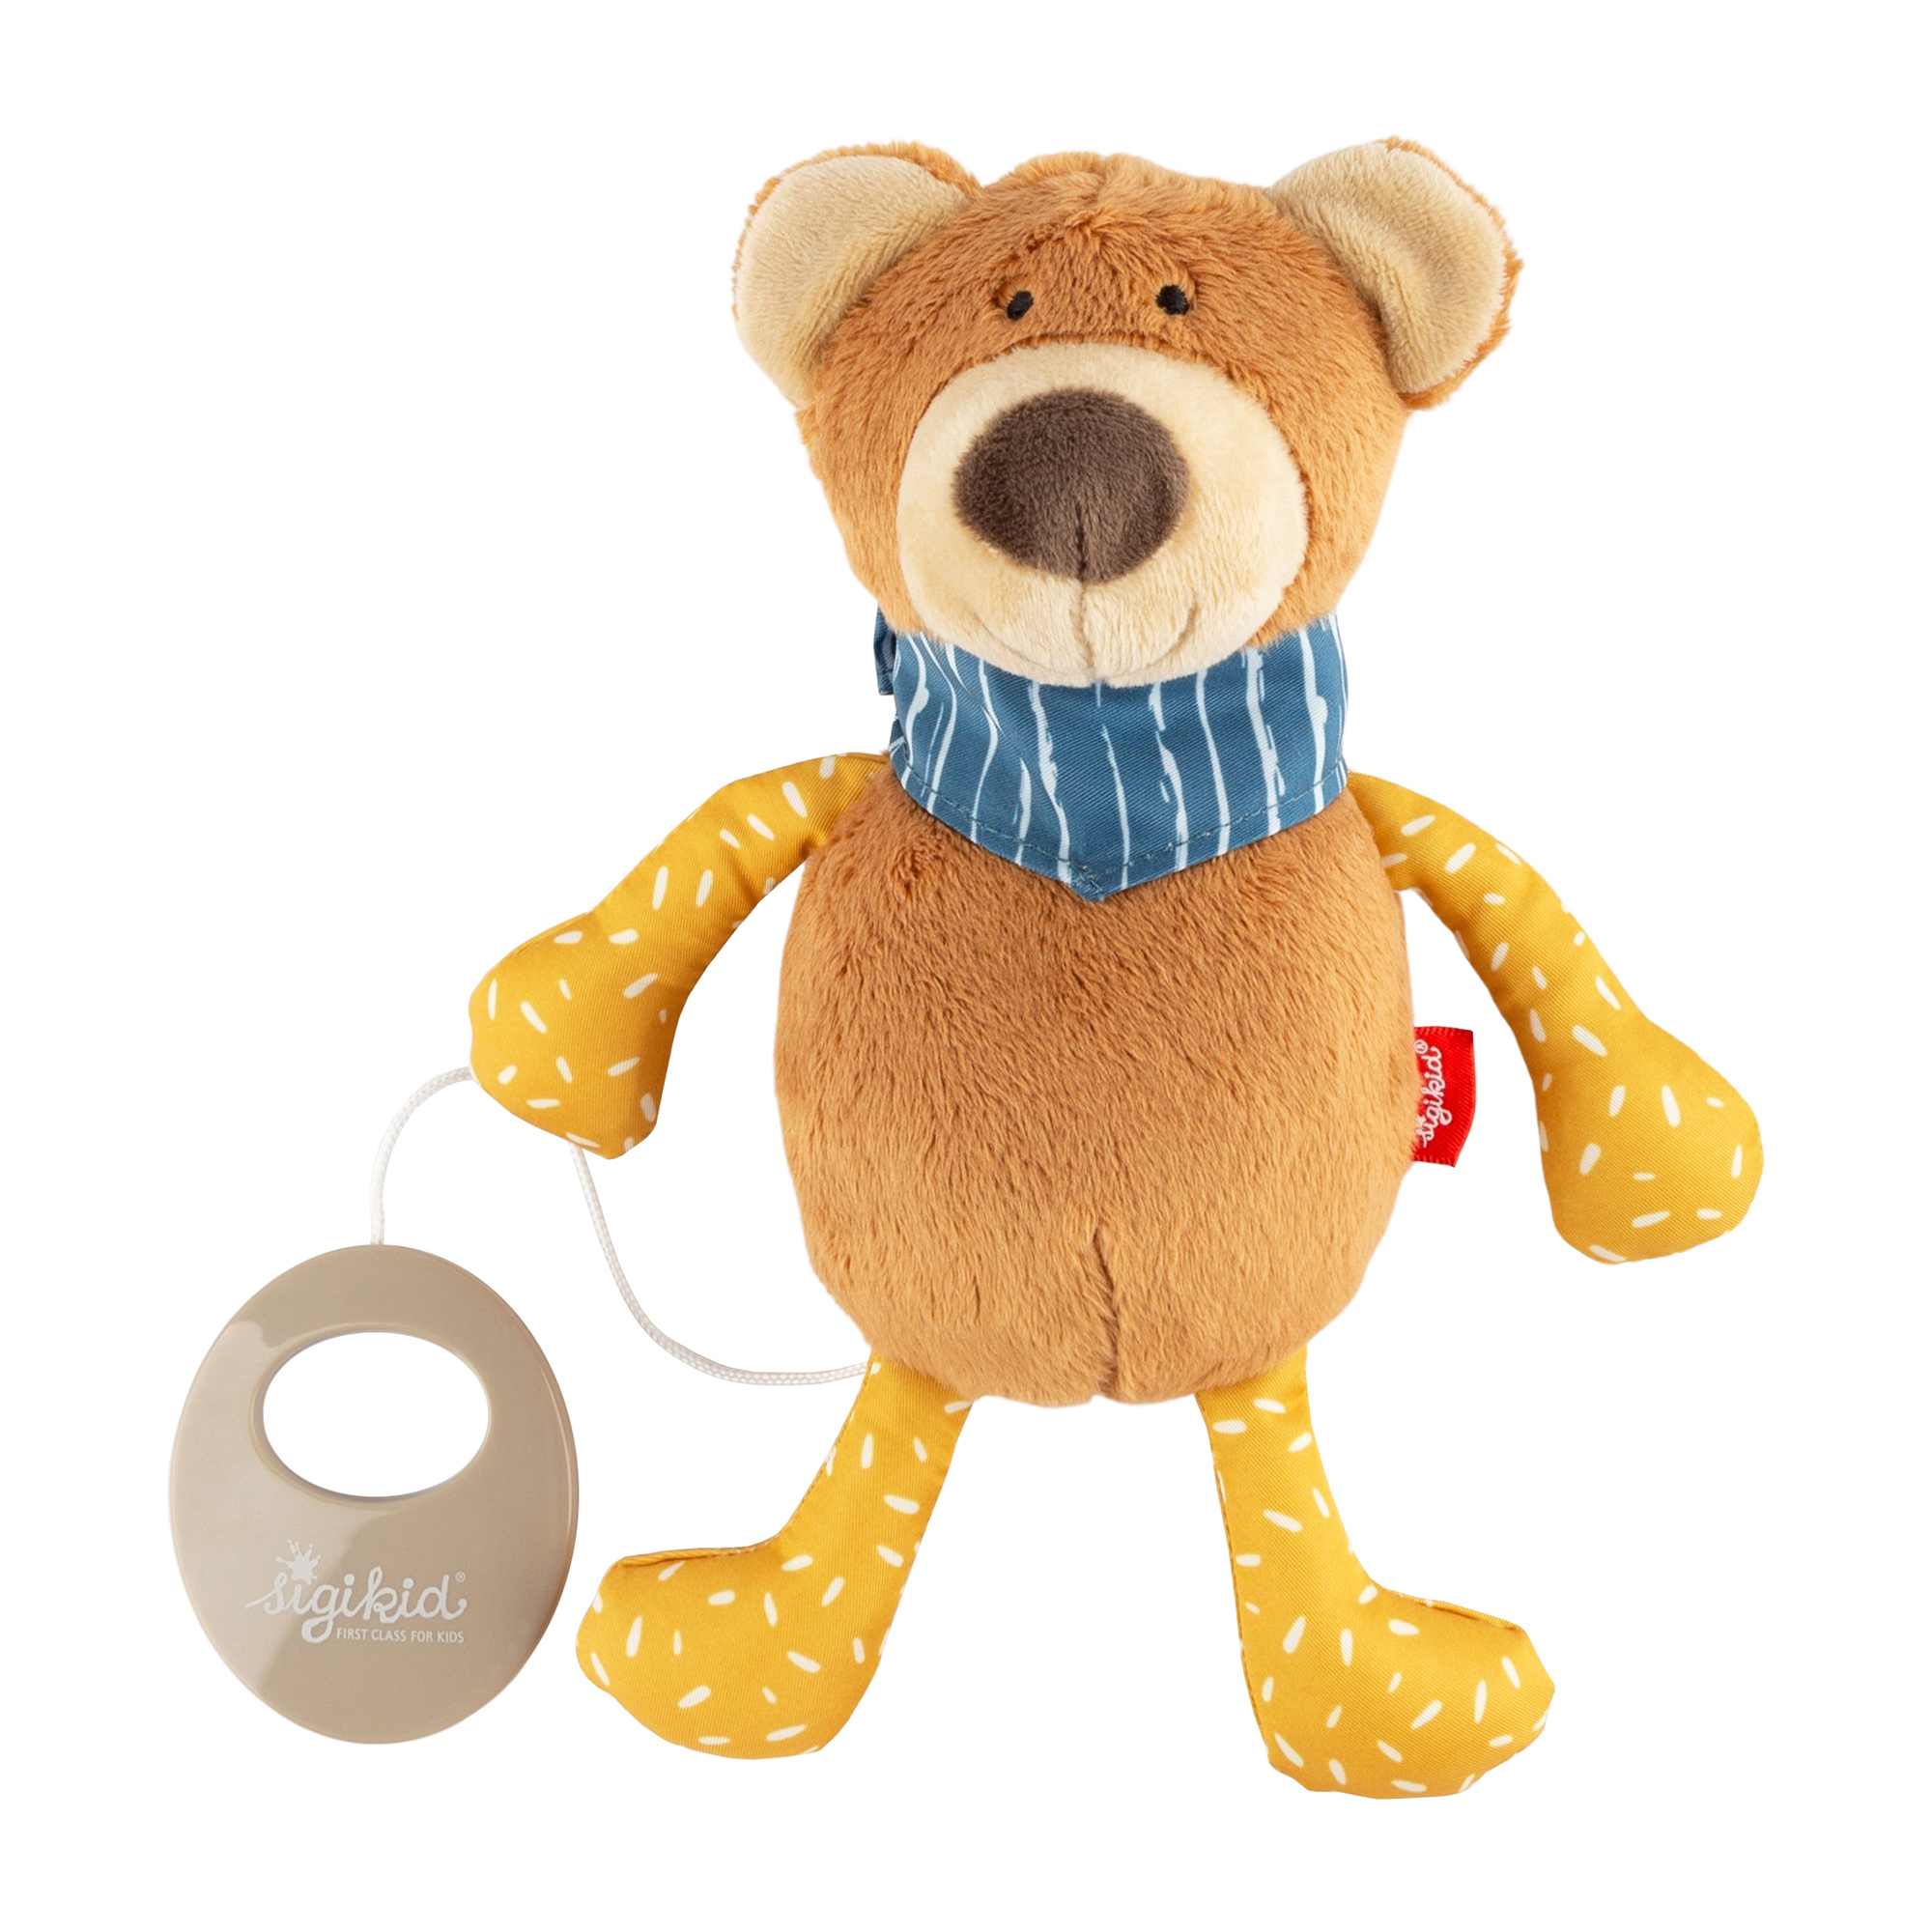 Musical plush toy teddy bear